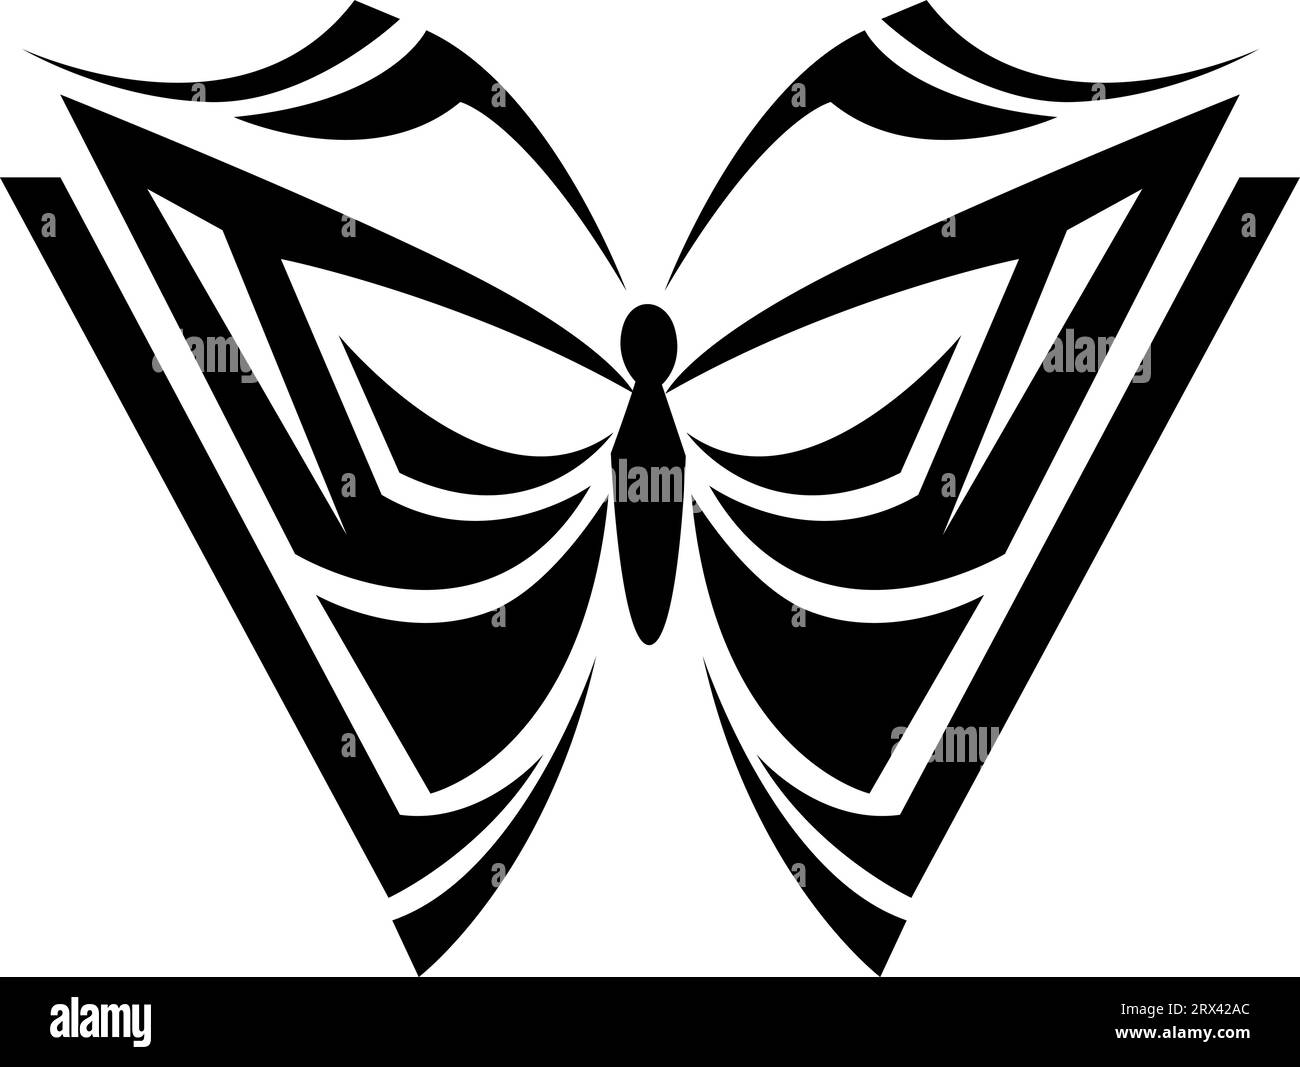 Tatouage papillon pointu, illustration de tatouage, vecteur sur fond blanc. Illustration de Vecteur